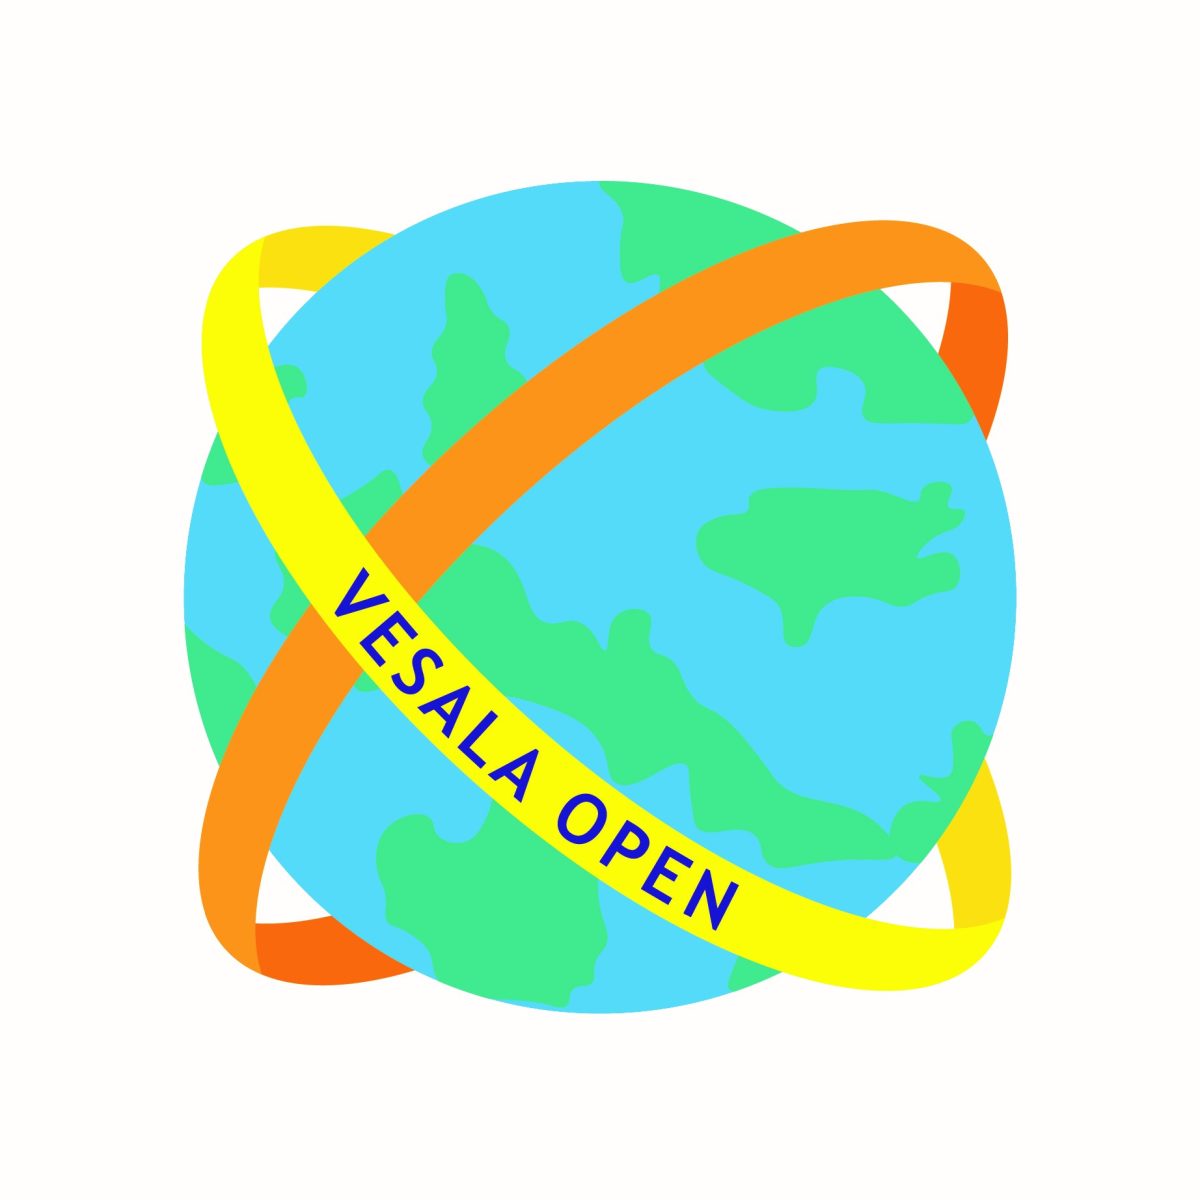 Vesala Open logo.